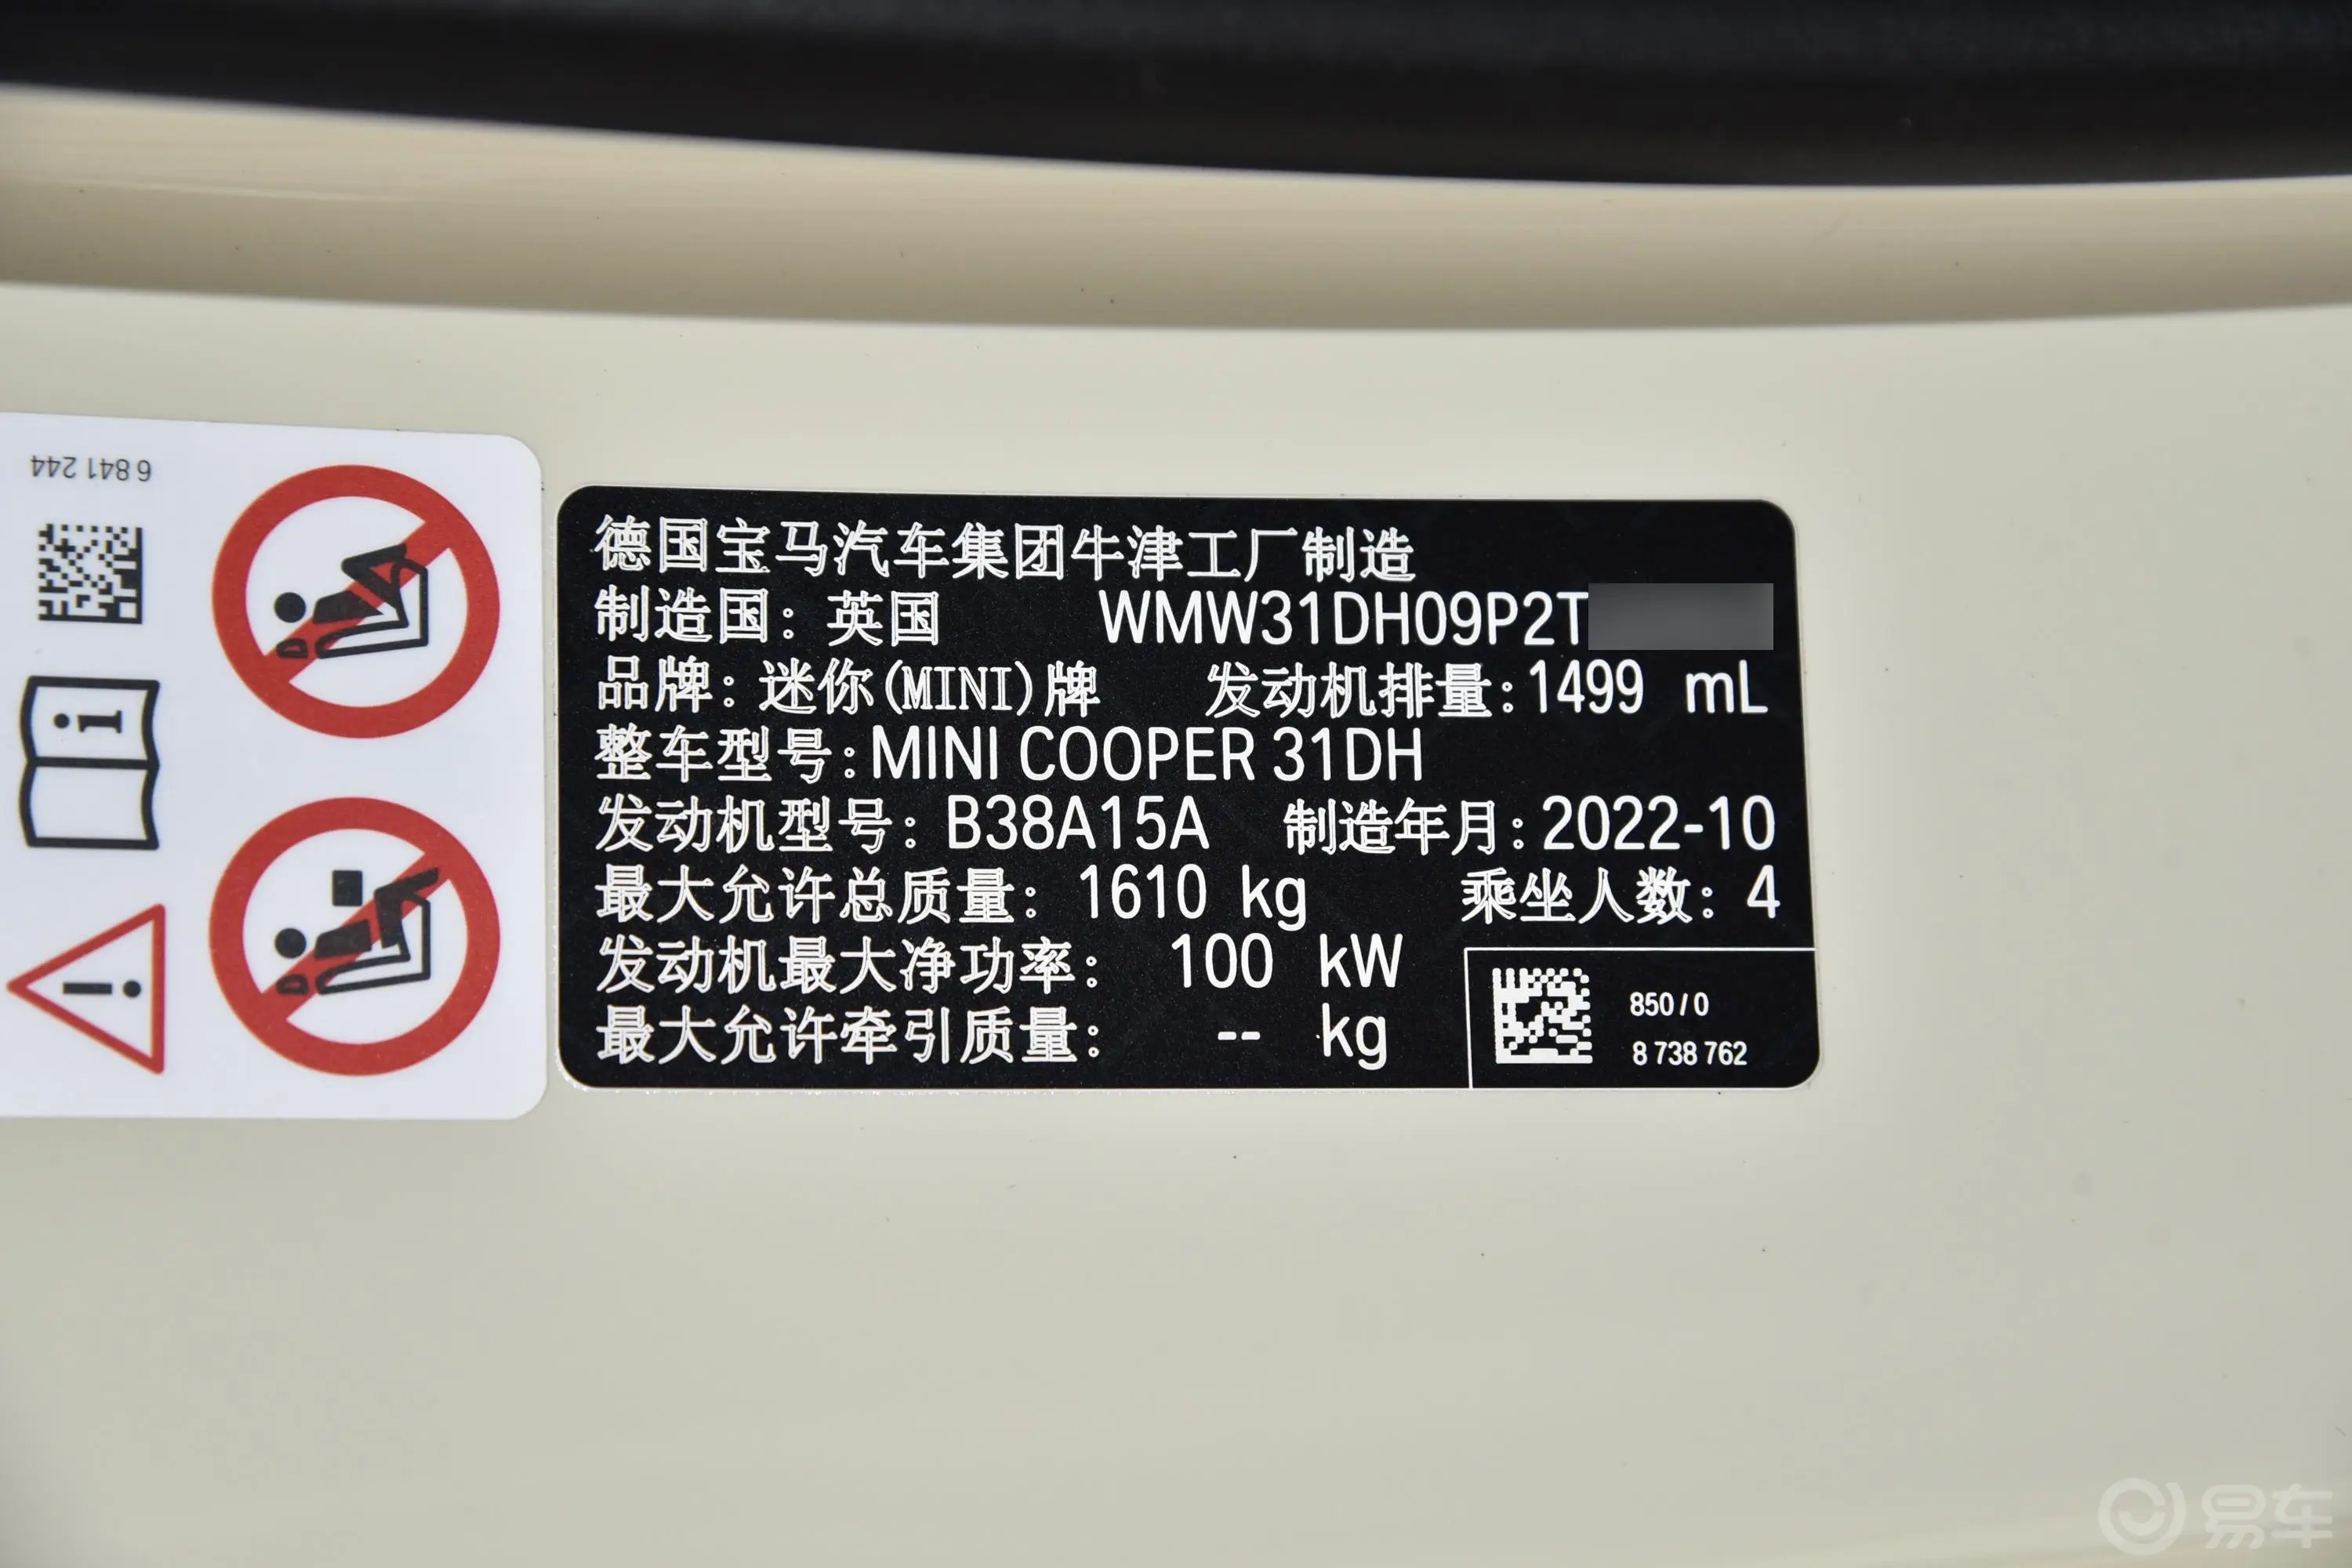 MINI改款 1.5T COOPER 艺术家车辆信息铭牌